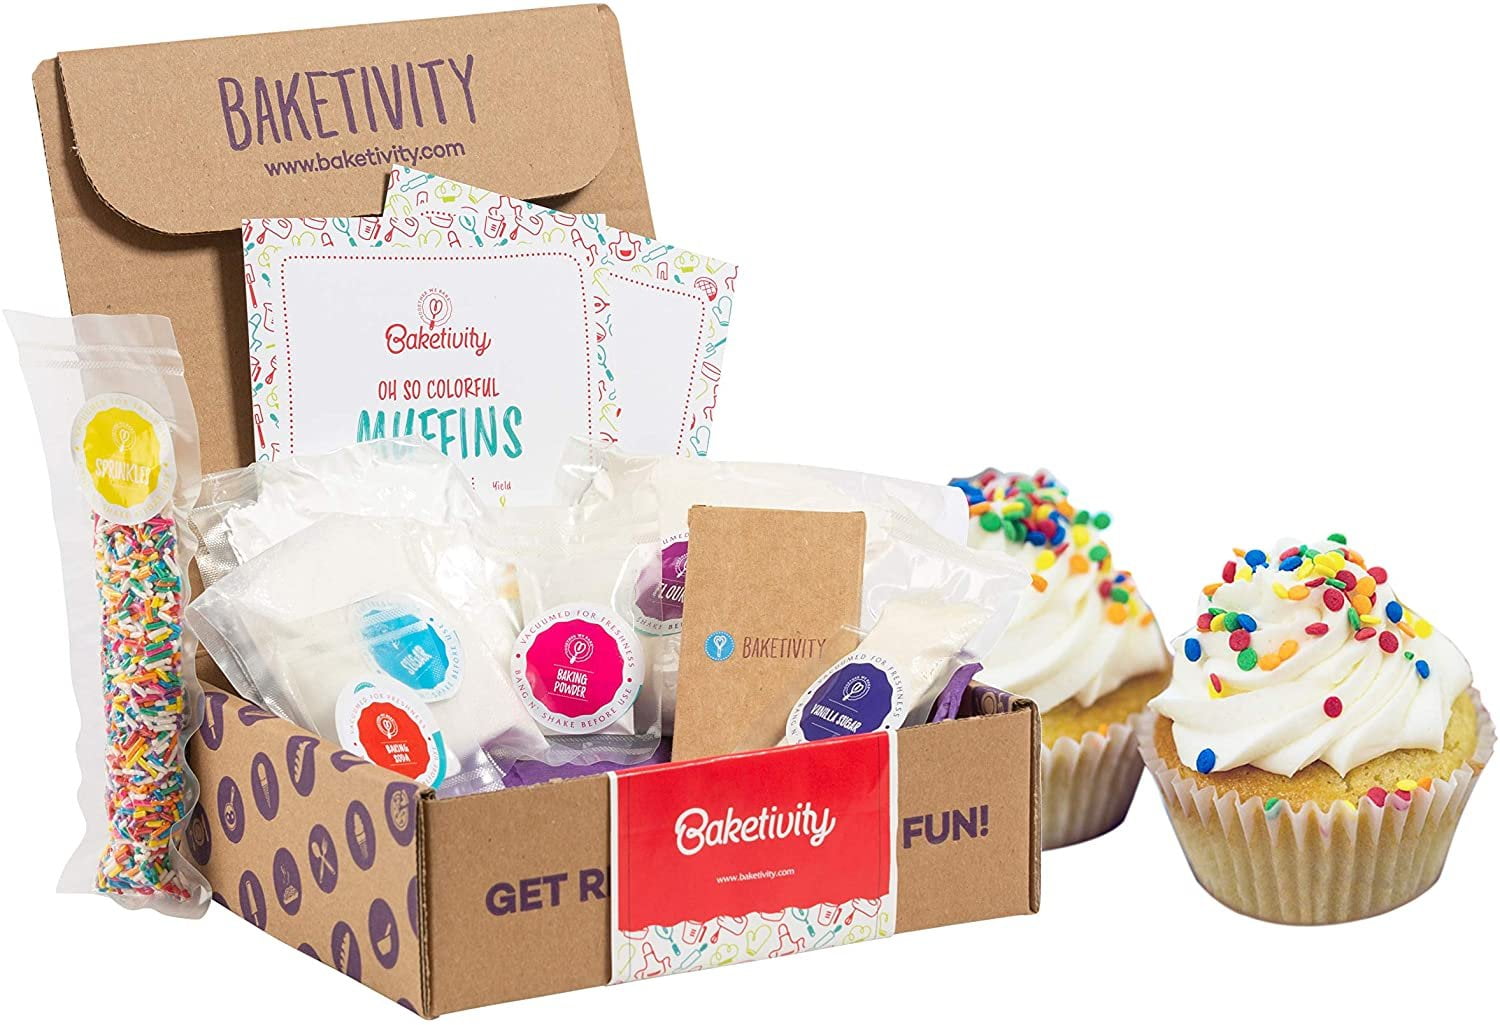 Baketivity Kids Baking Kits Reviews - MealFinds